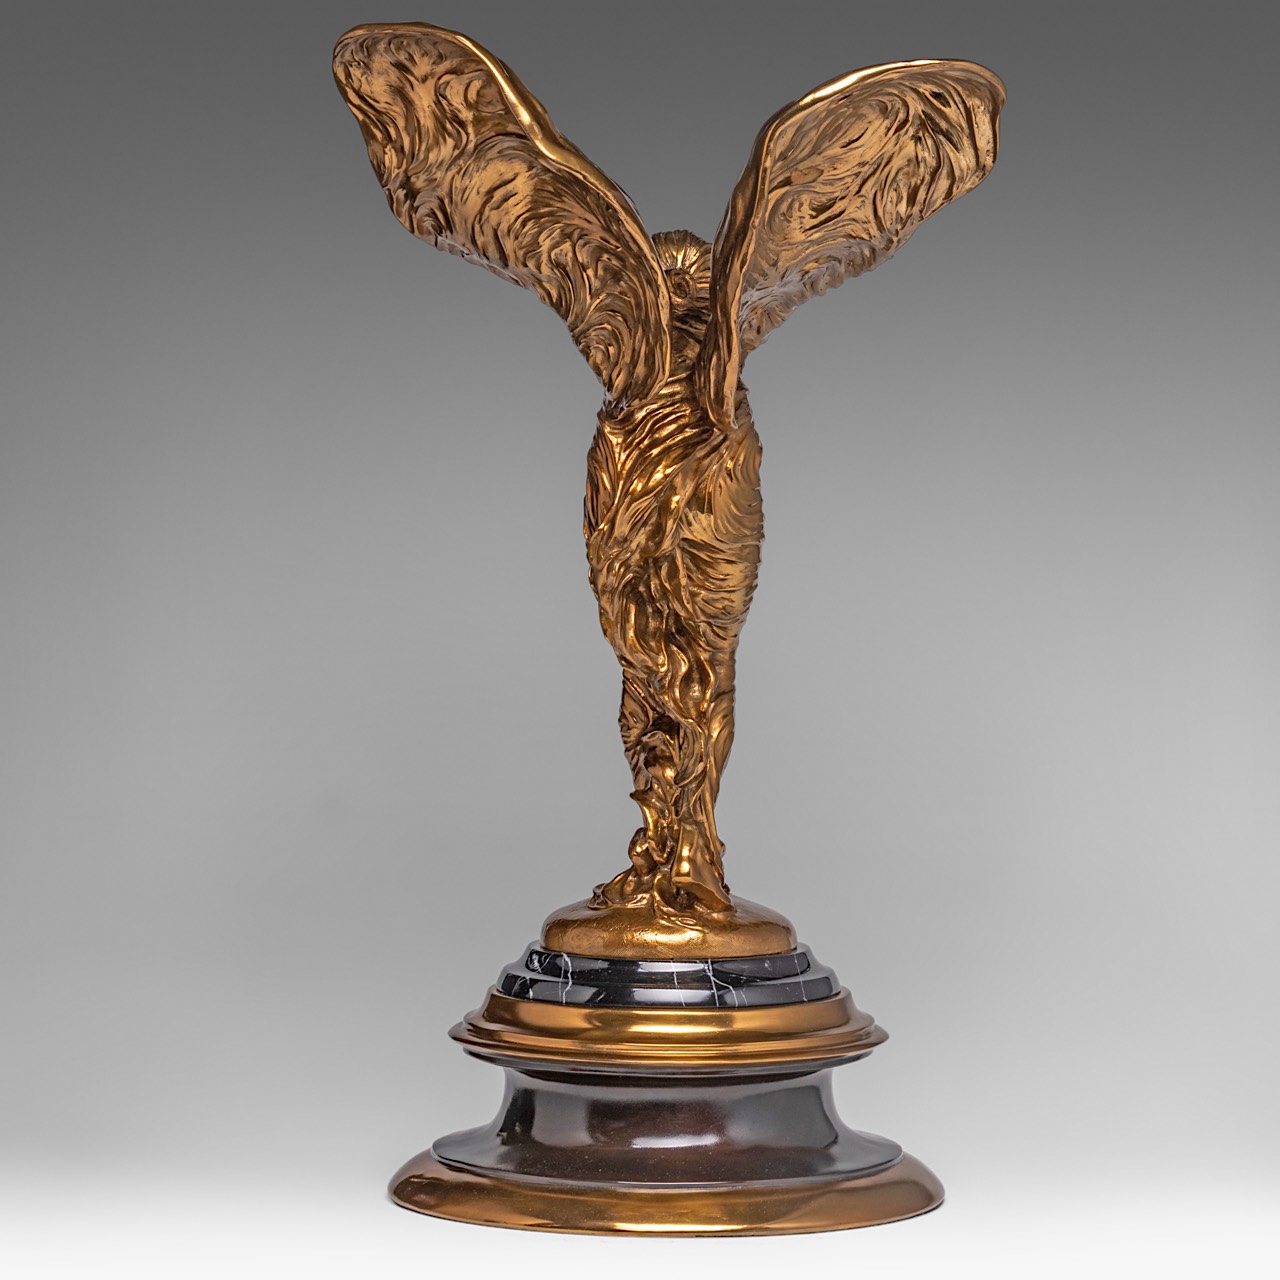 Charles Sykes (1875-1950), gilt bronze sculpture of the 'Spirit of Ecstasy', Rolls-Royce, H 69 cm - Image 4 of 7